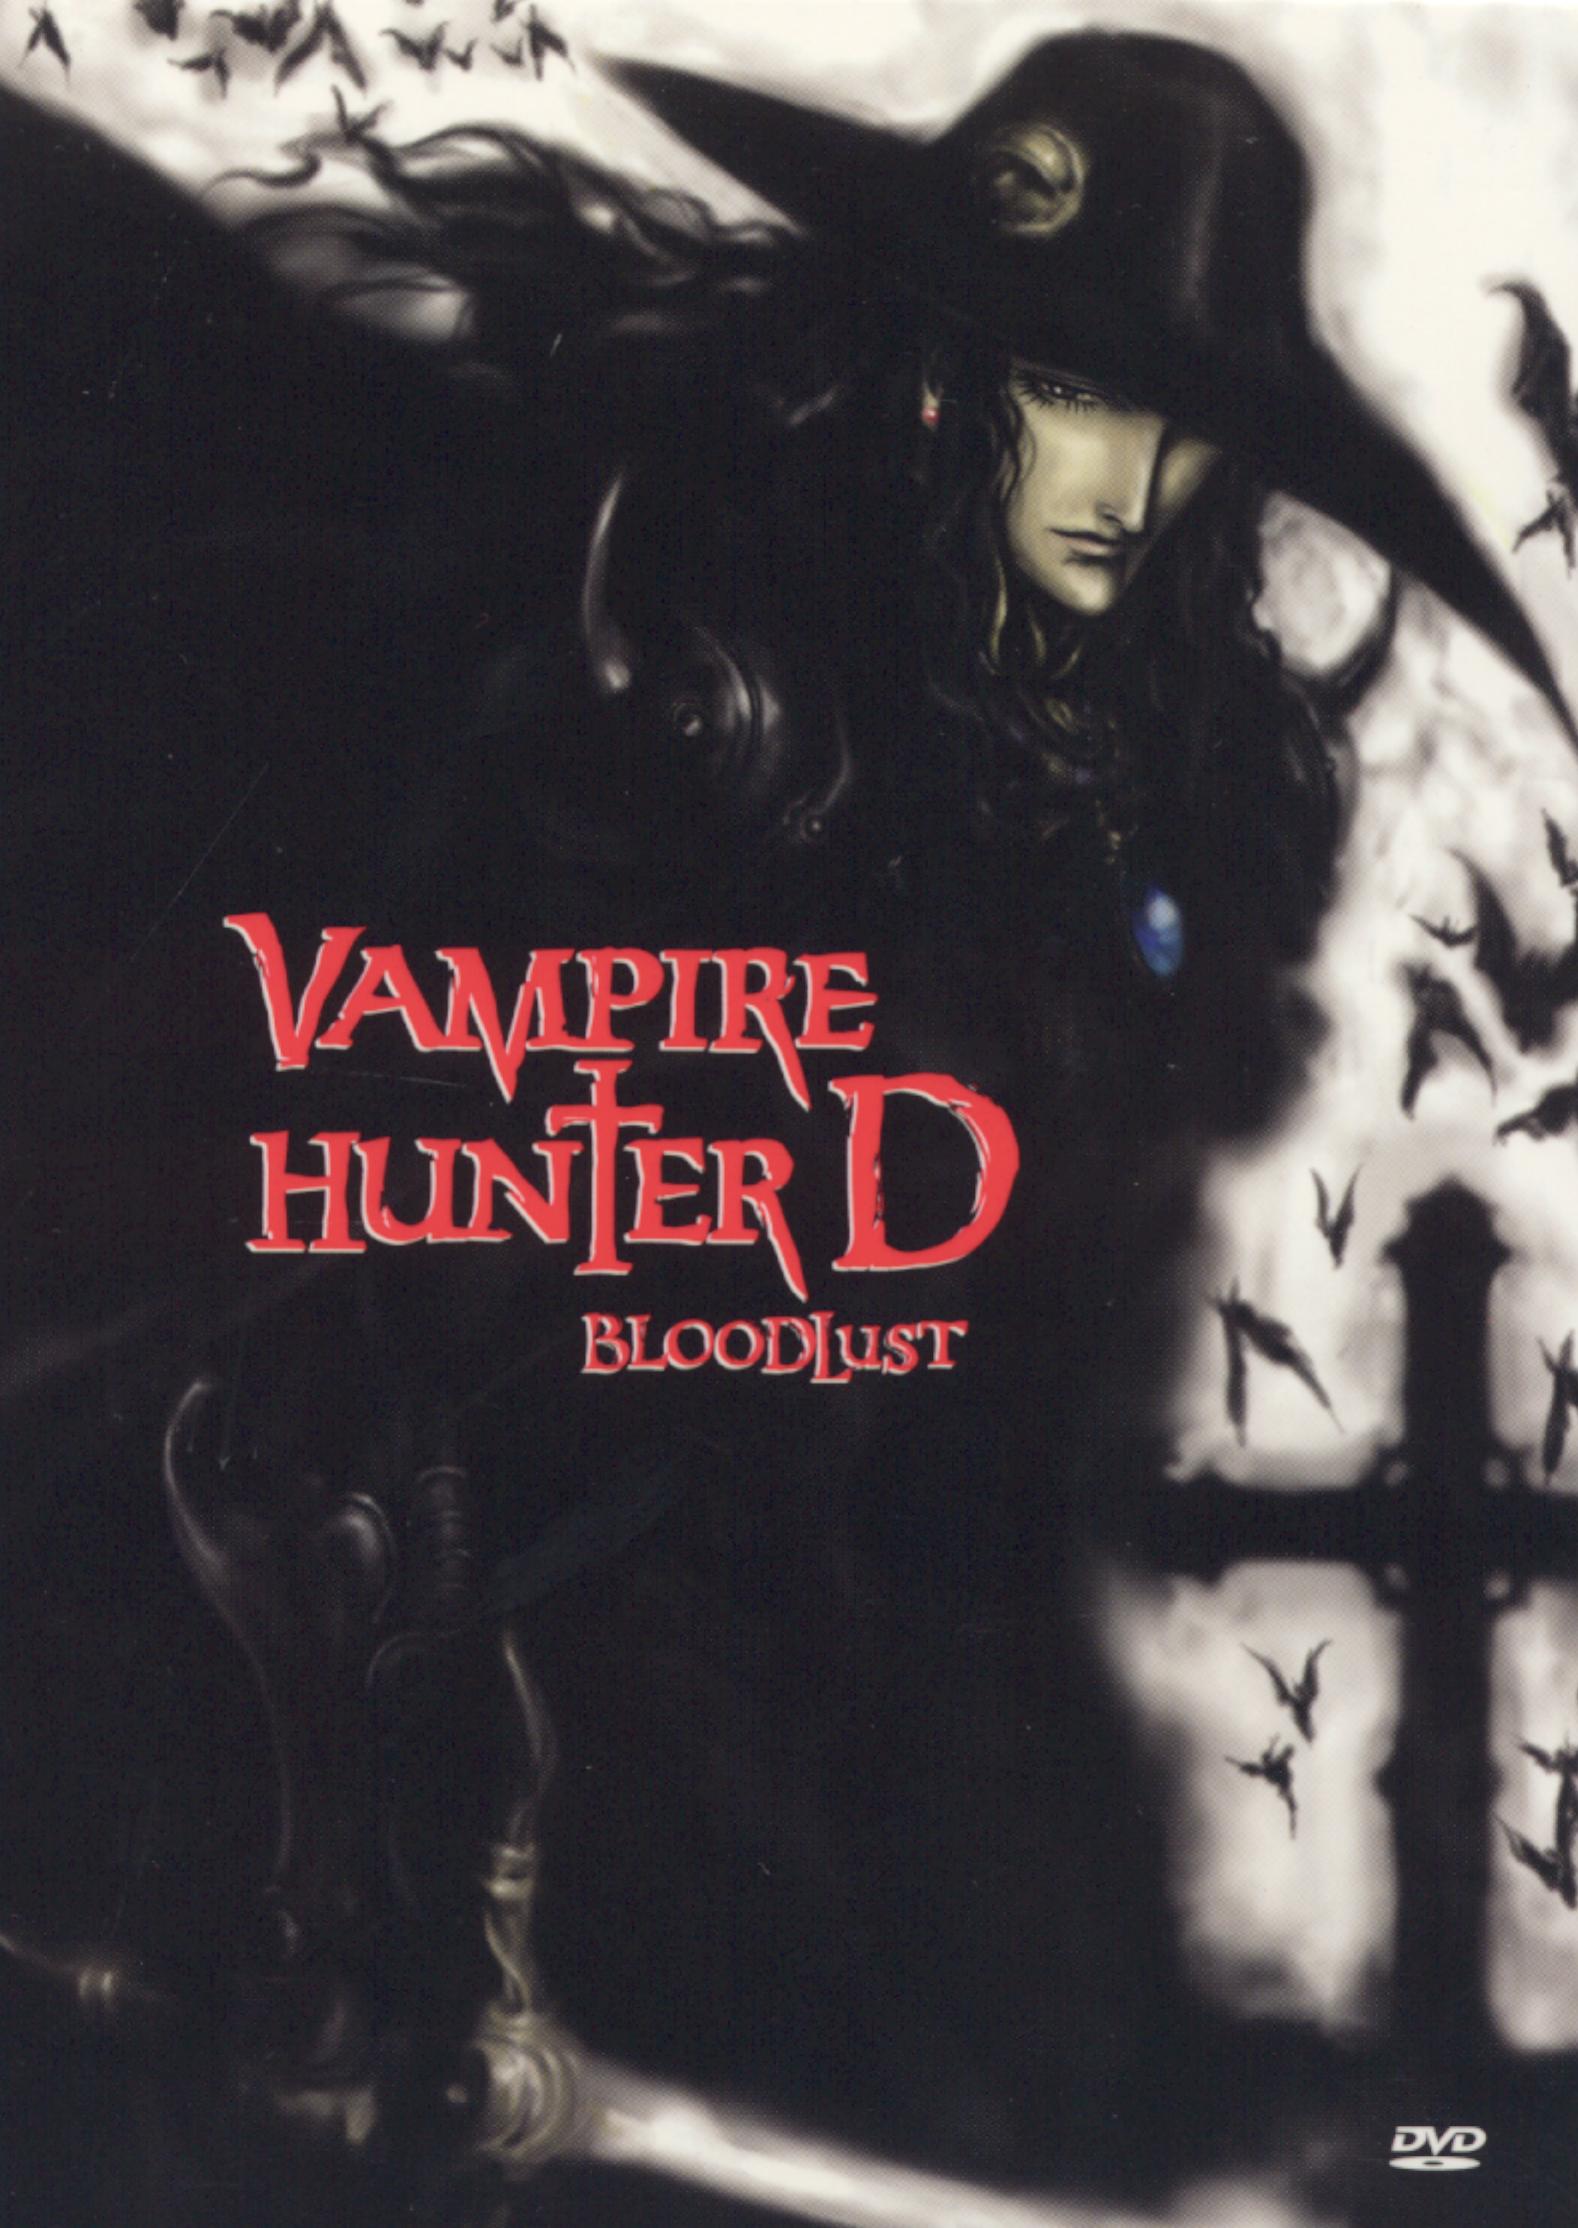 Vampire Hunter D Bloodlust Movie English Subtitle Part 2 of 2